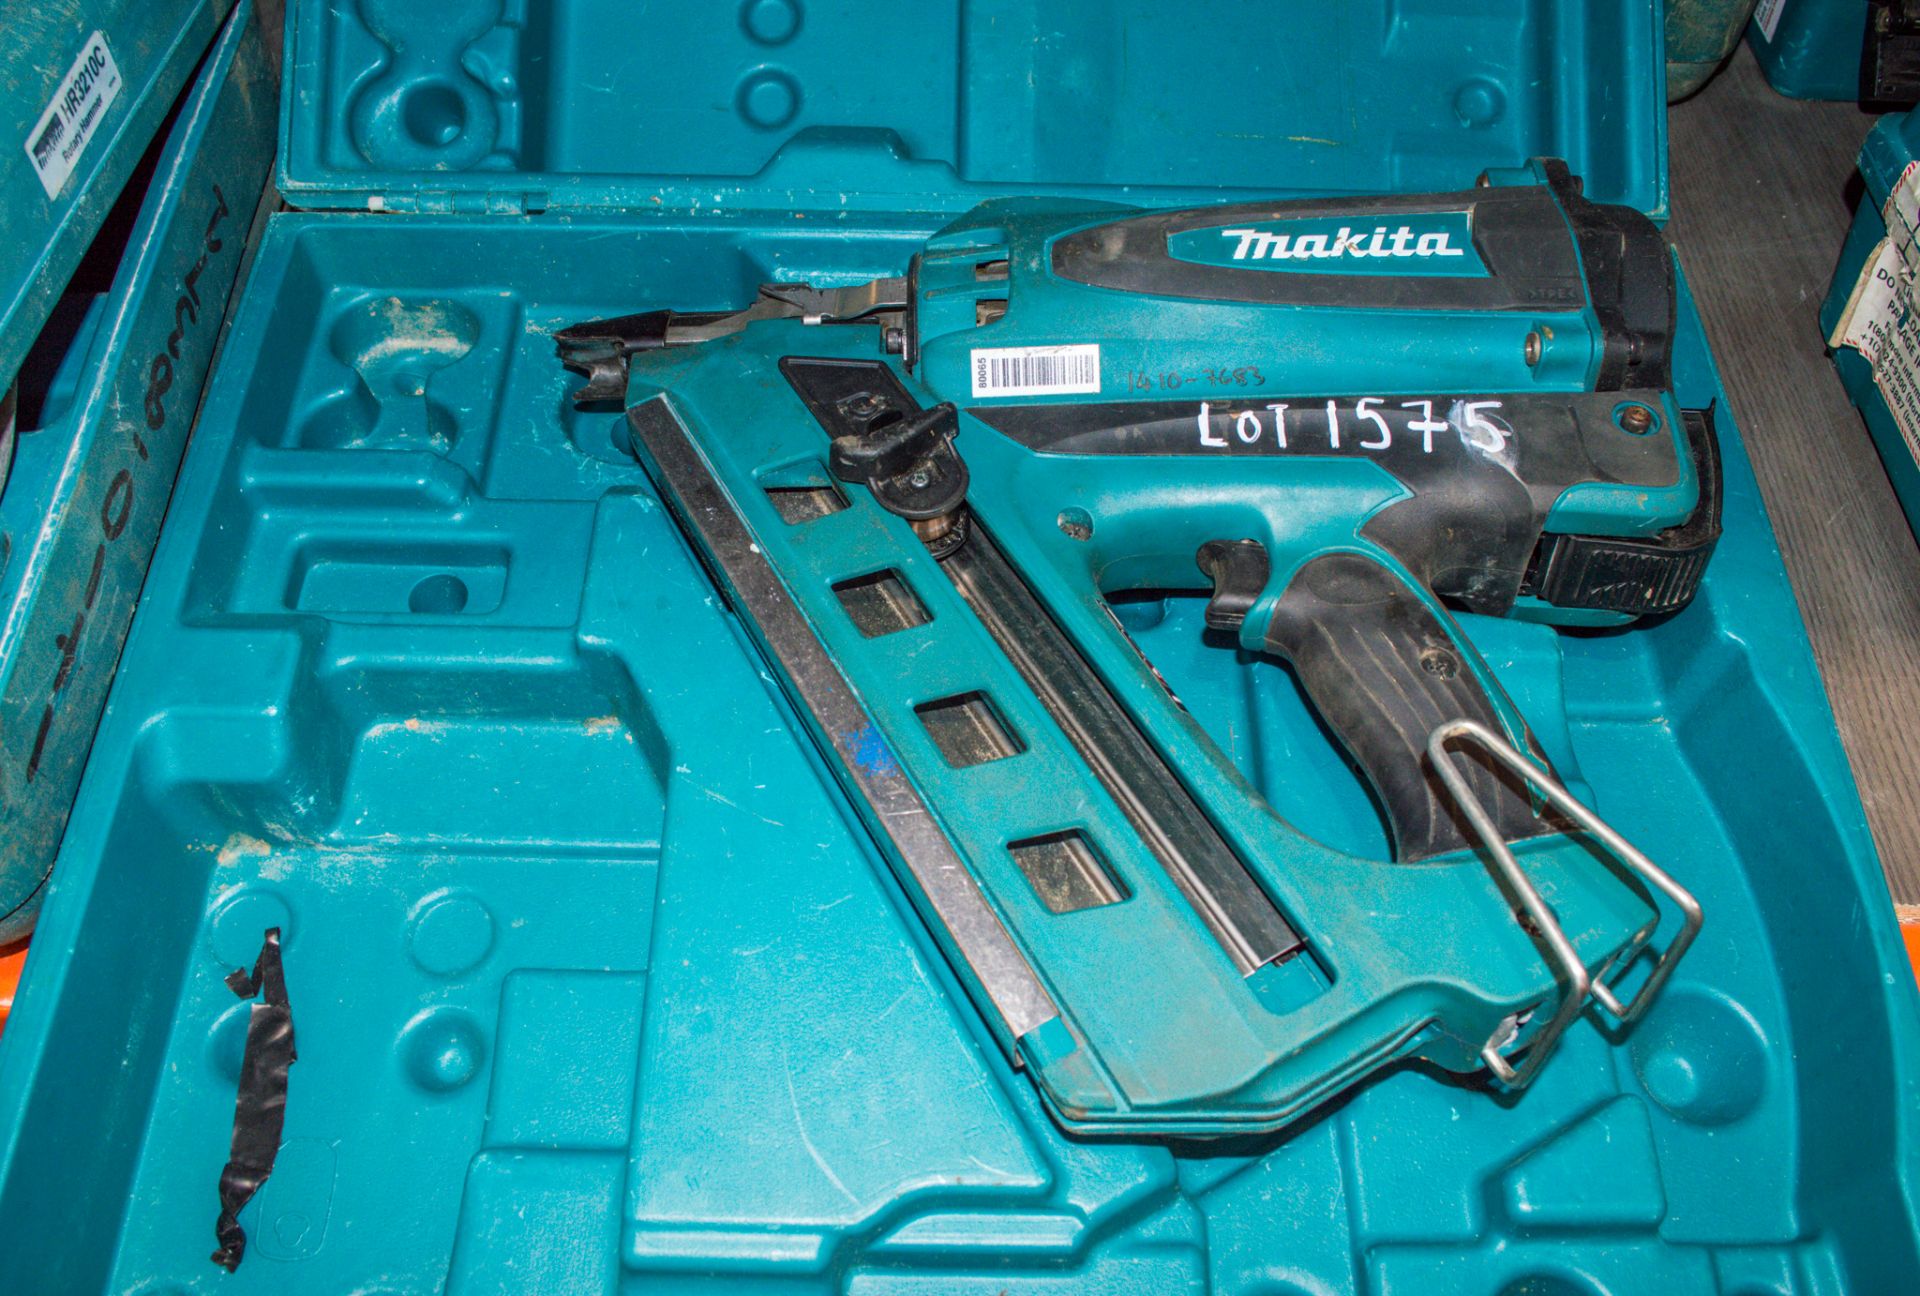 Makita GN900 7.2v cordless nail gun c/w battery and carry case1410-7683